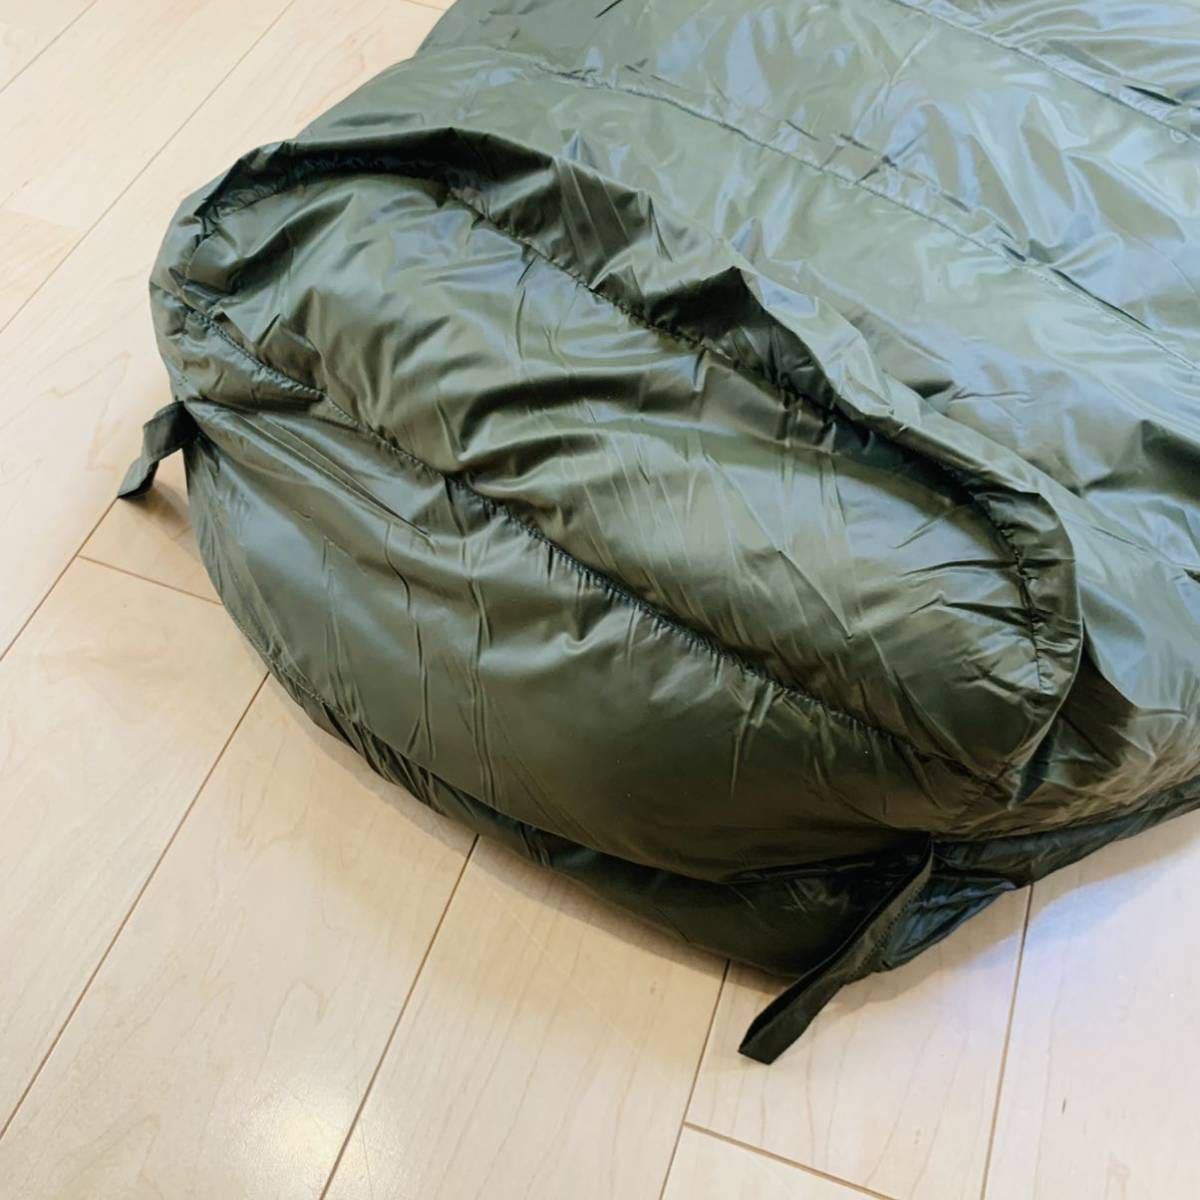 KAMPERBOX最高品質 極細1000gアヒルダウン マミー型寝袋 シュラフ厚暖撥水 最低-35℃ アウトドア キャンプ 野外登山 車中泊 205x88cm 1.6kg_画像9